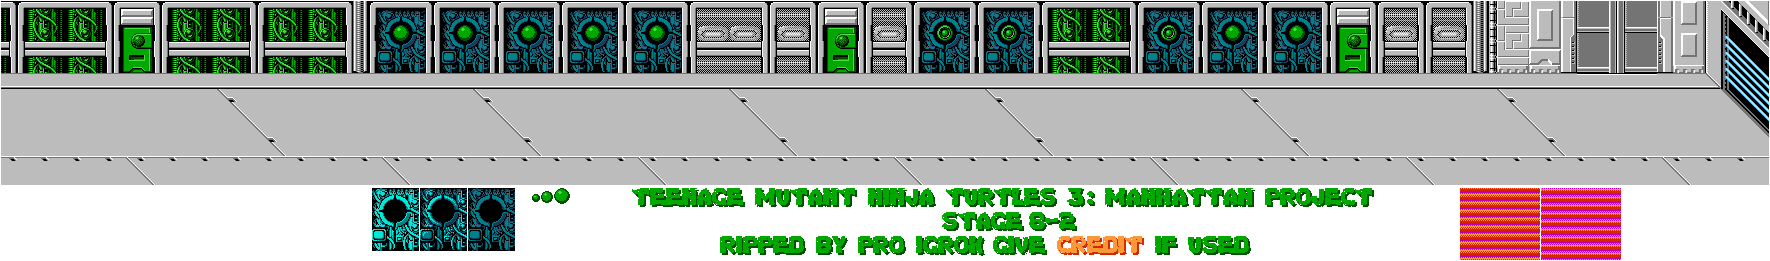 Teenage Mutant Ninja Turtles 3: The Manhattan Project - Stage 8-2: Krang's Spaceship